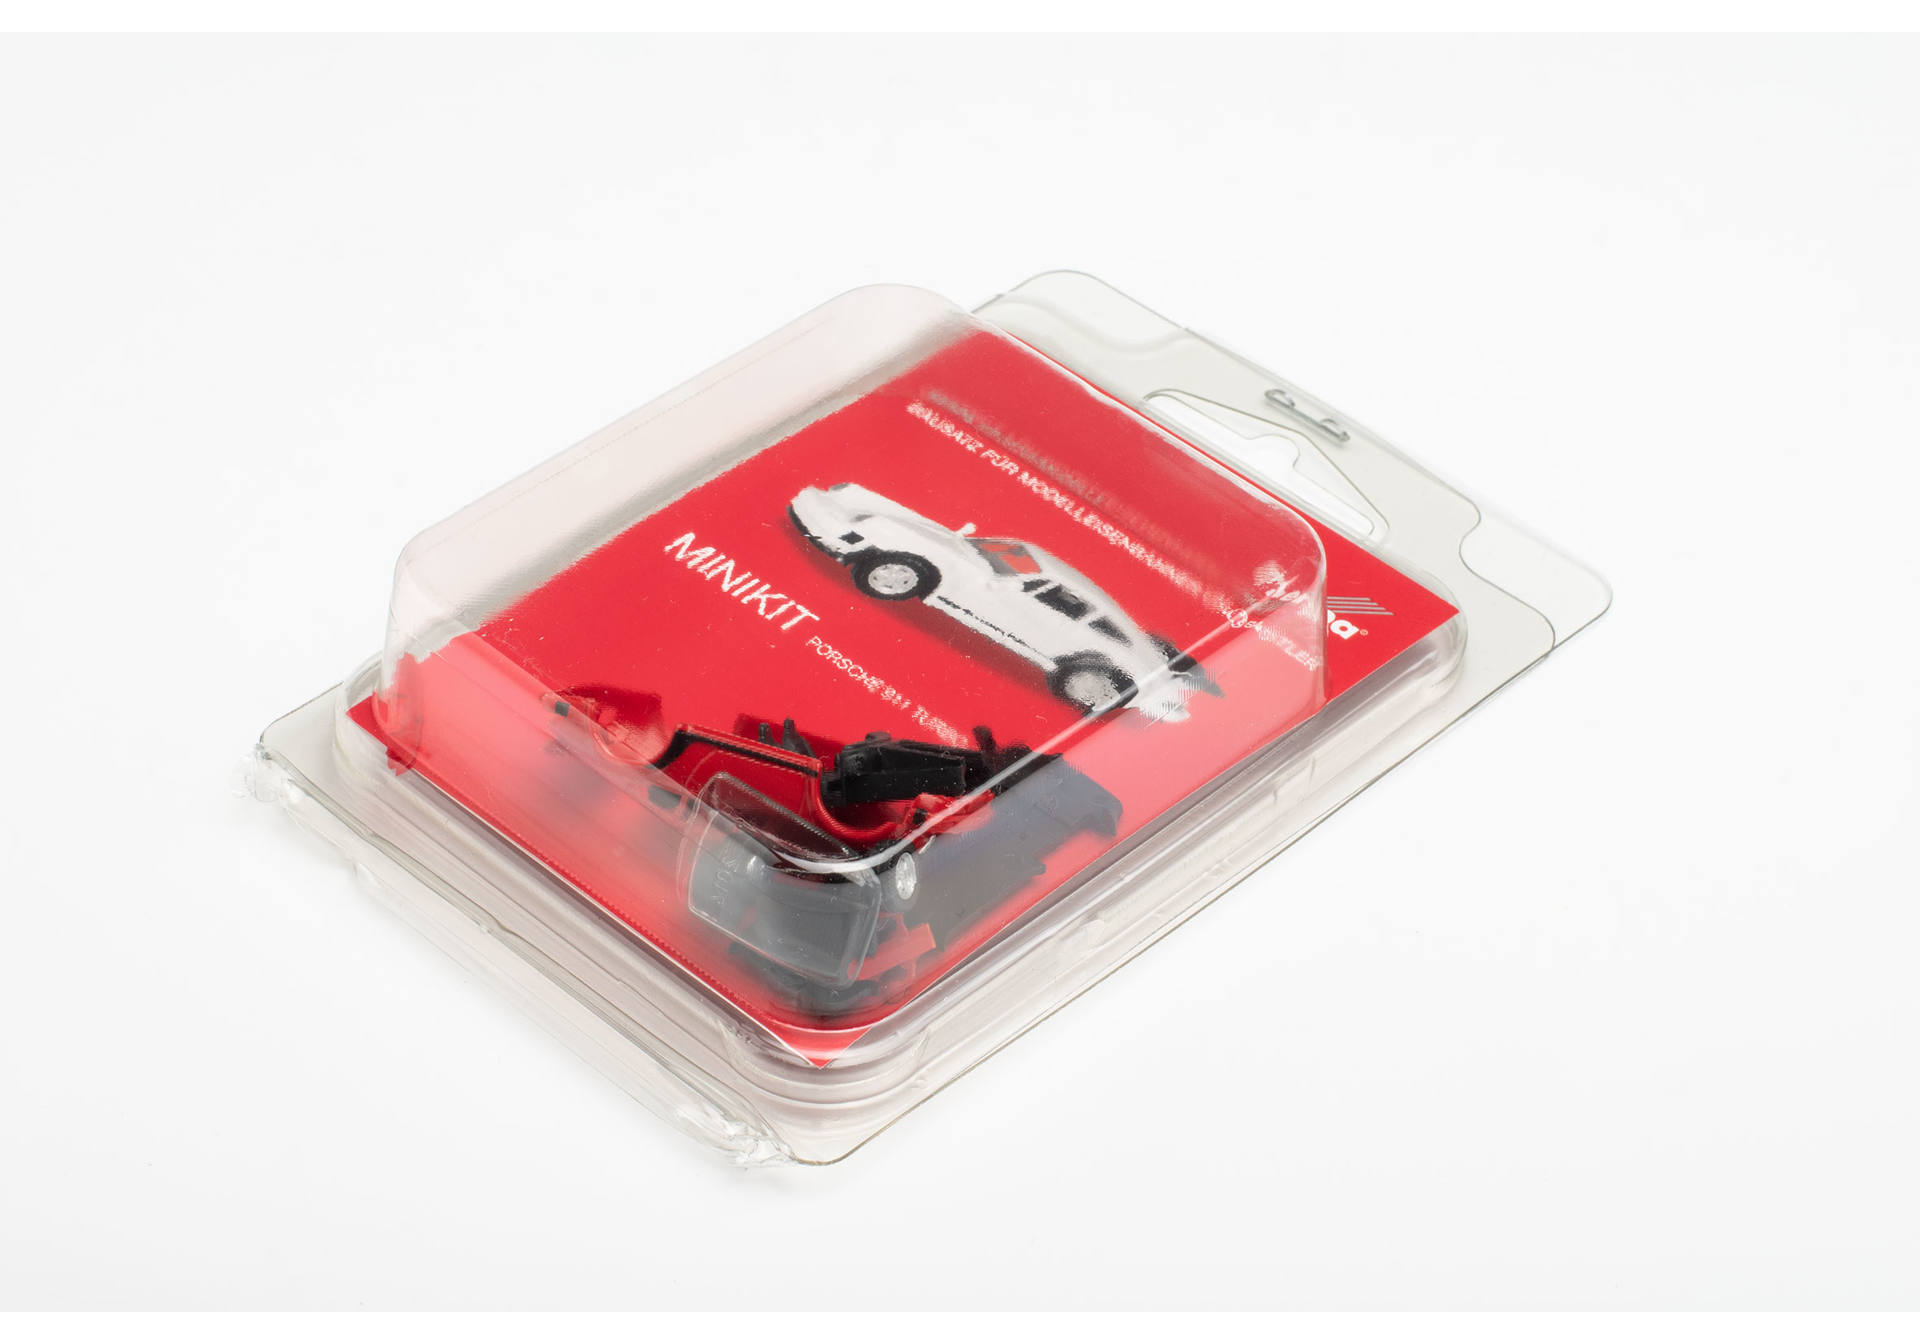 Minikit Porsche 911 Turbo, red